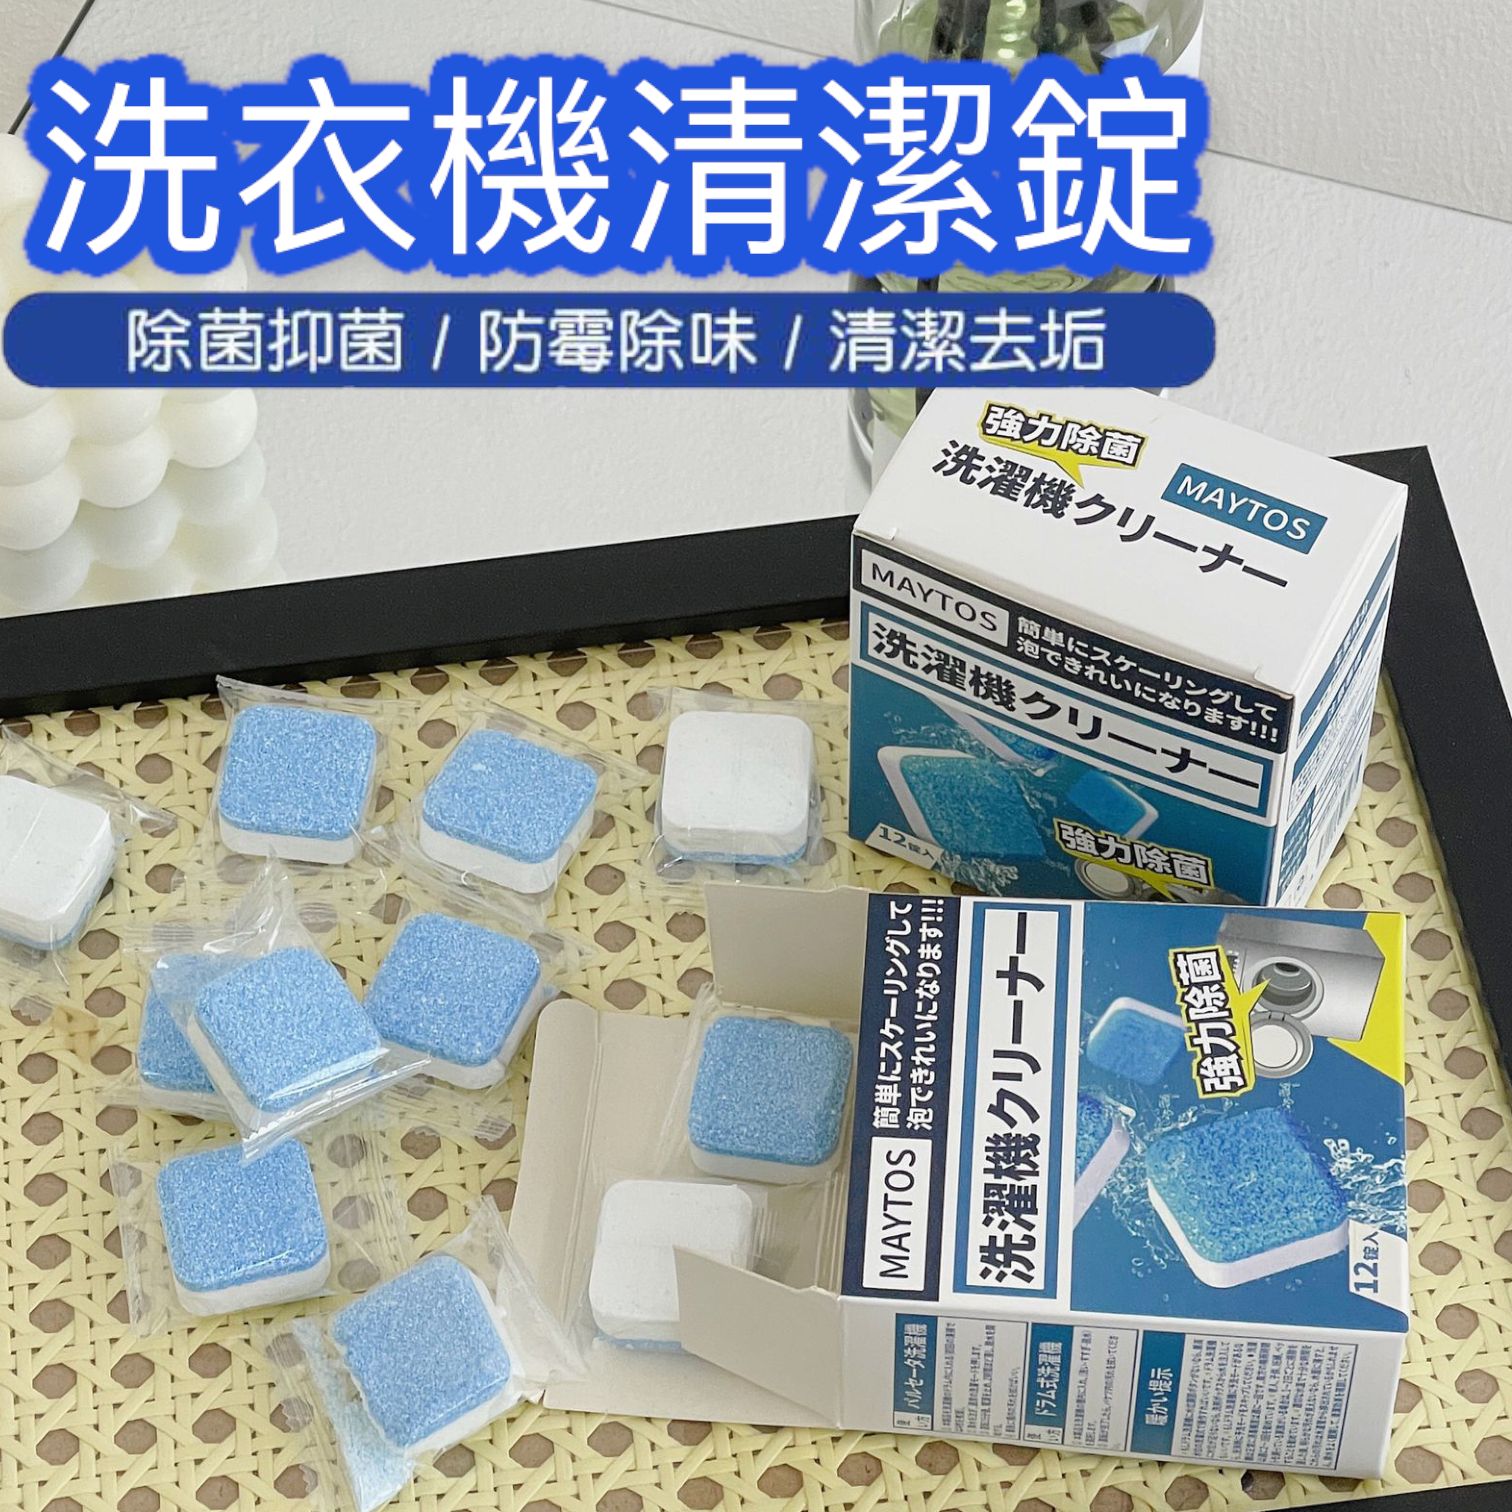 MAYTOS抗菌消毒洗衣機清潔錠 (1盒12錠)